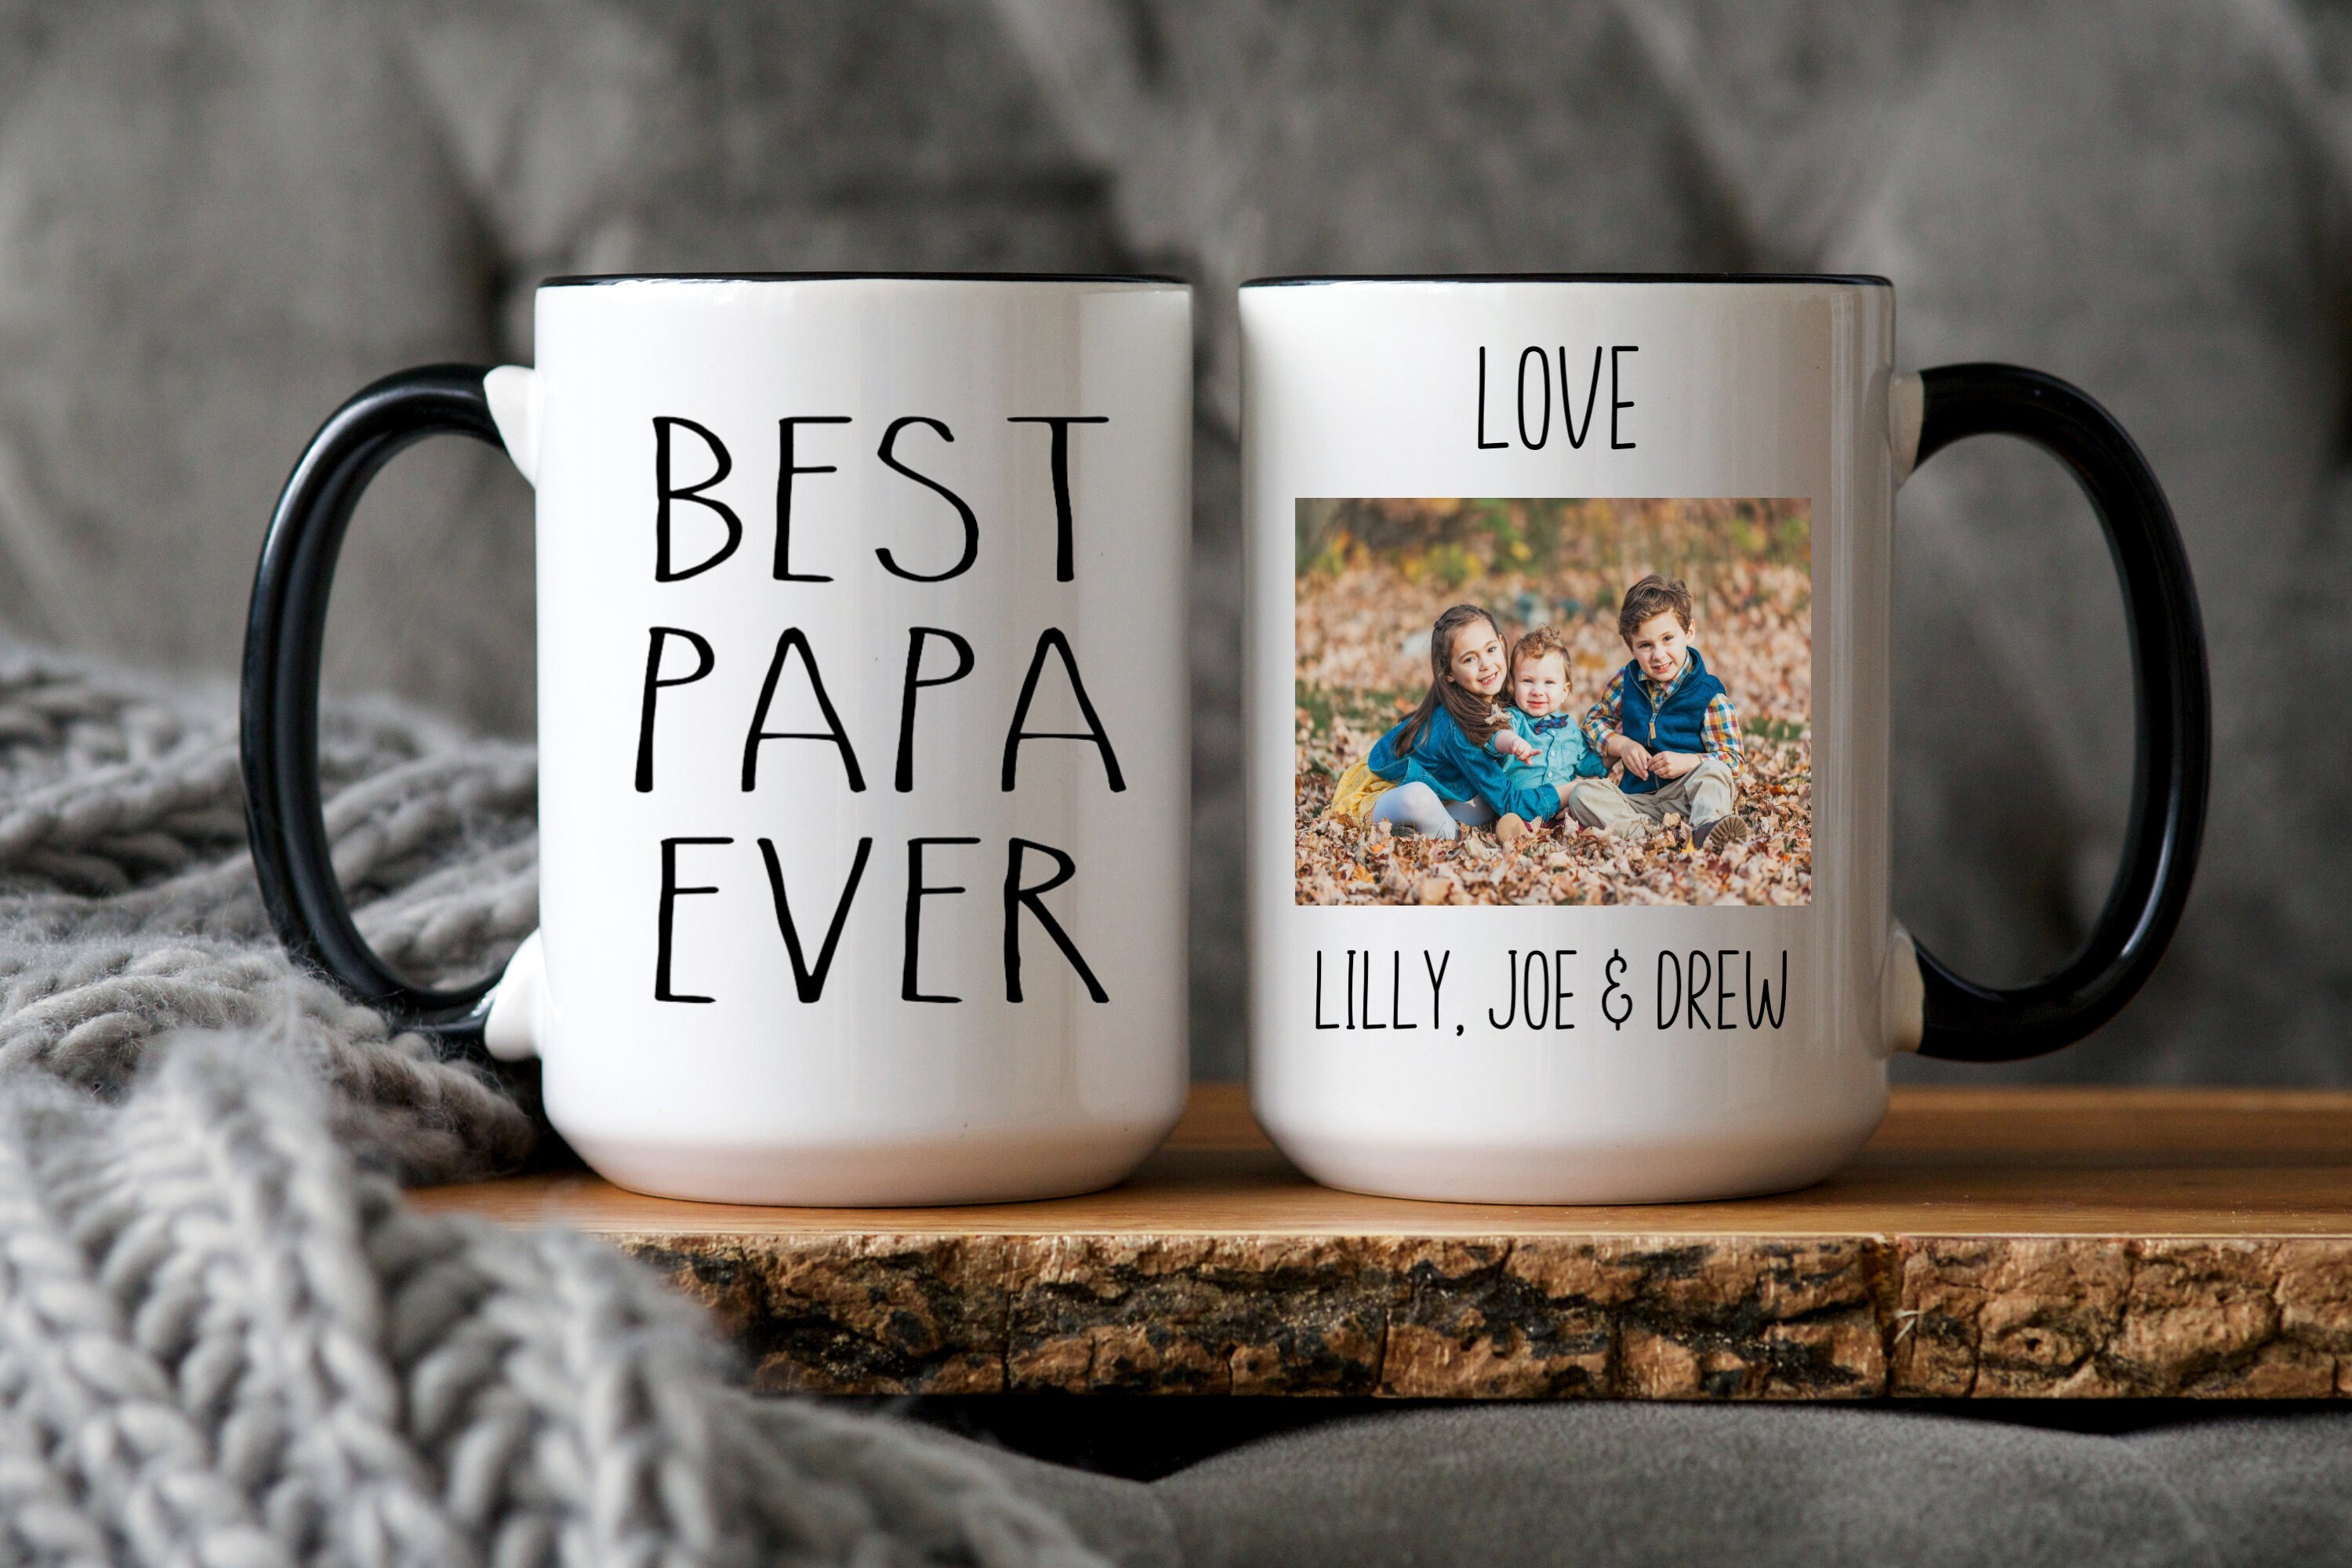  IZI POD Personalized Papa mug - My favorite people call me Papa  coffee mug with GrandKids names, Dad mug, Grandpa mug : Home & Kitchen